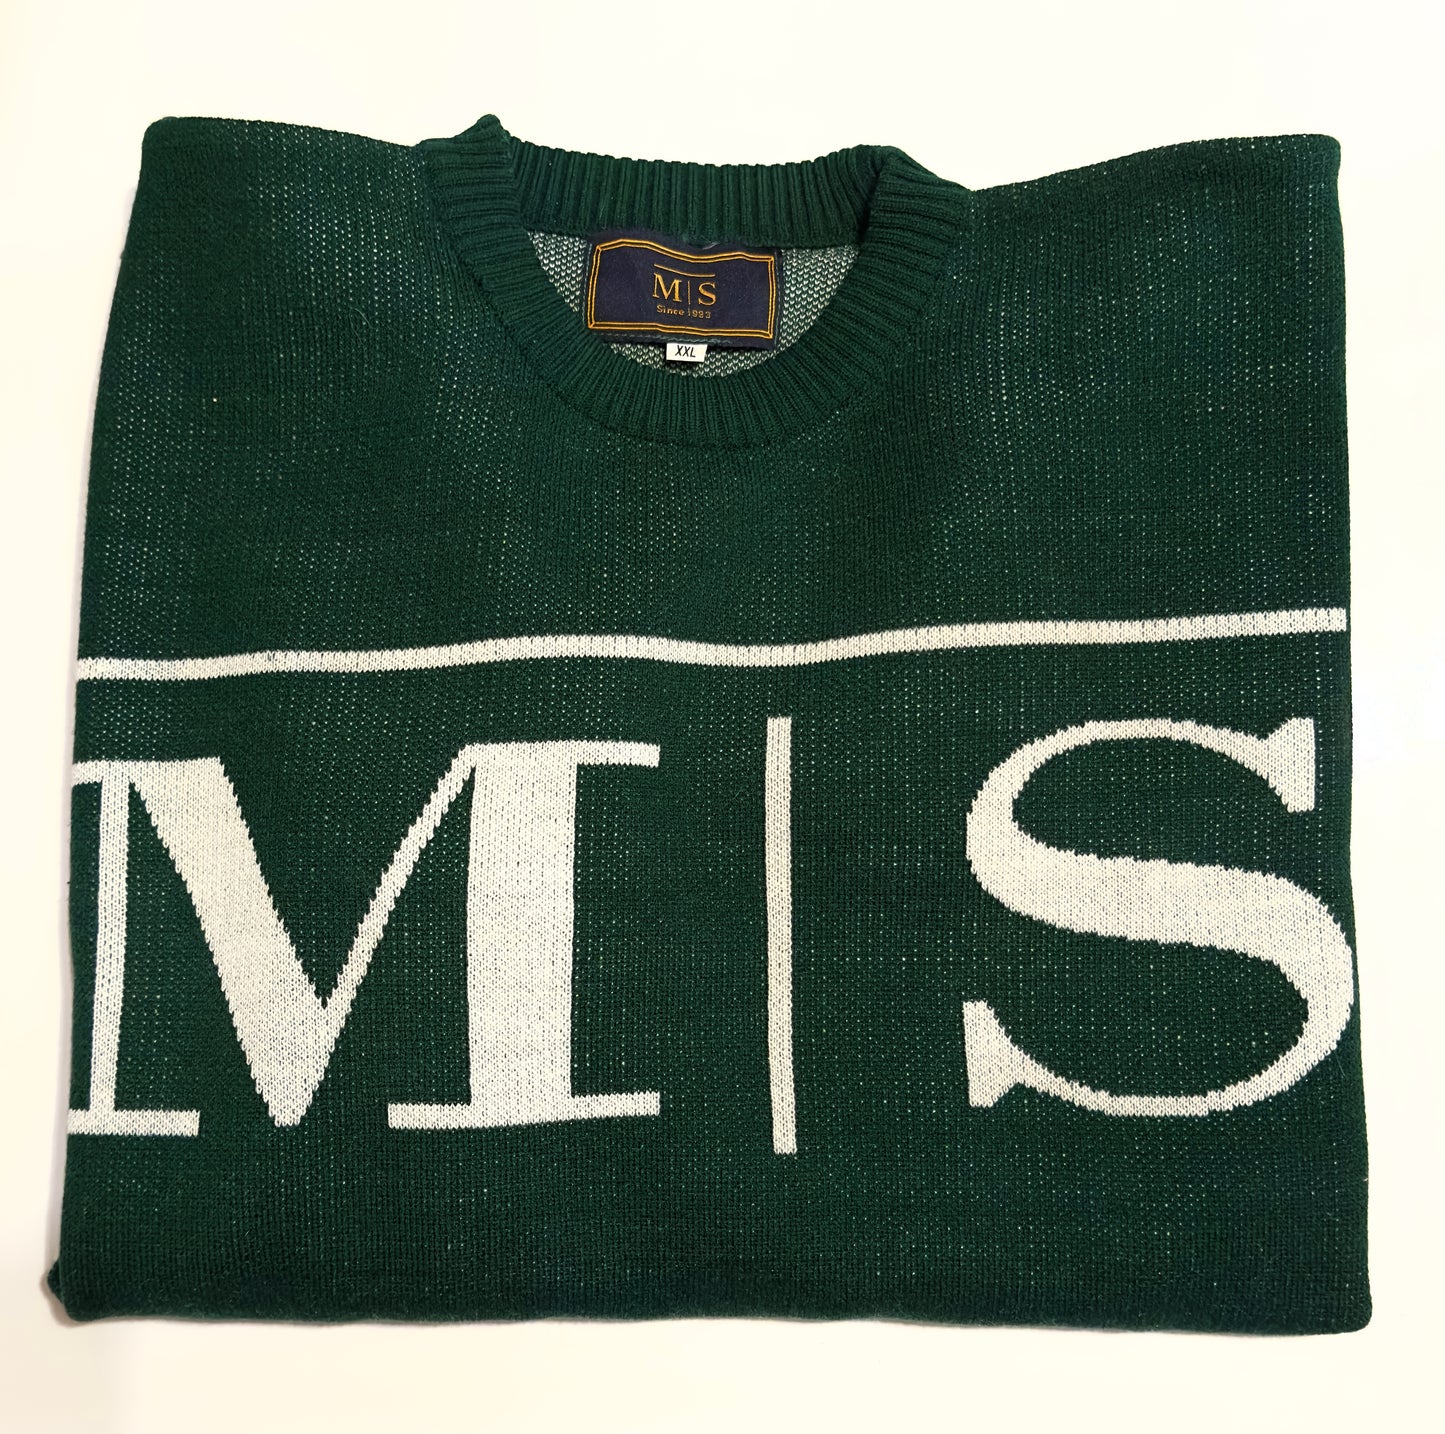 MTS 1983 Knit